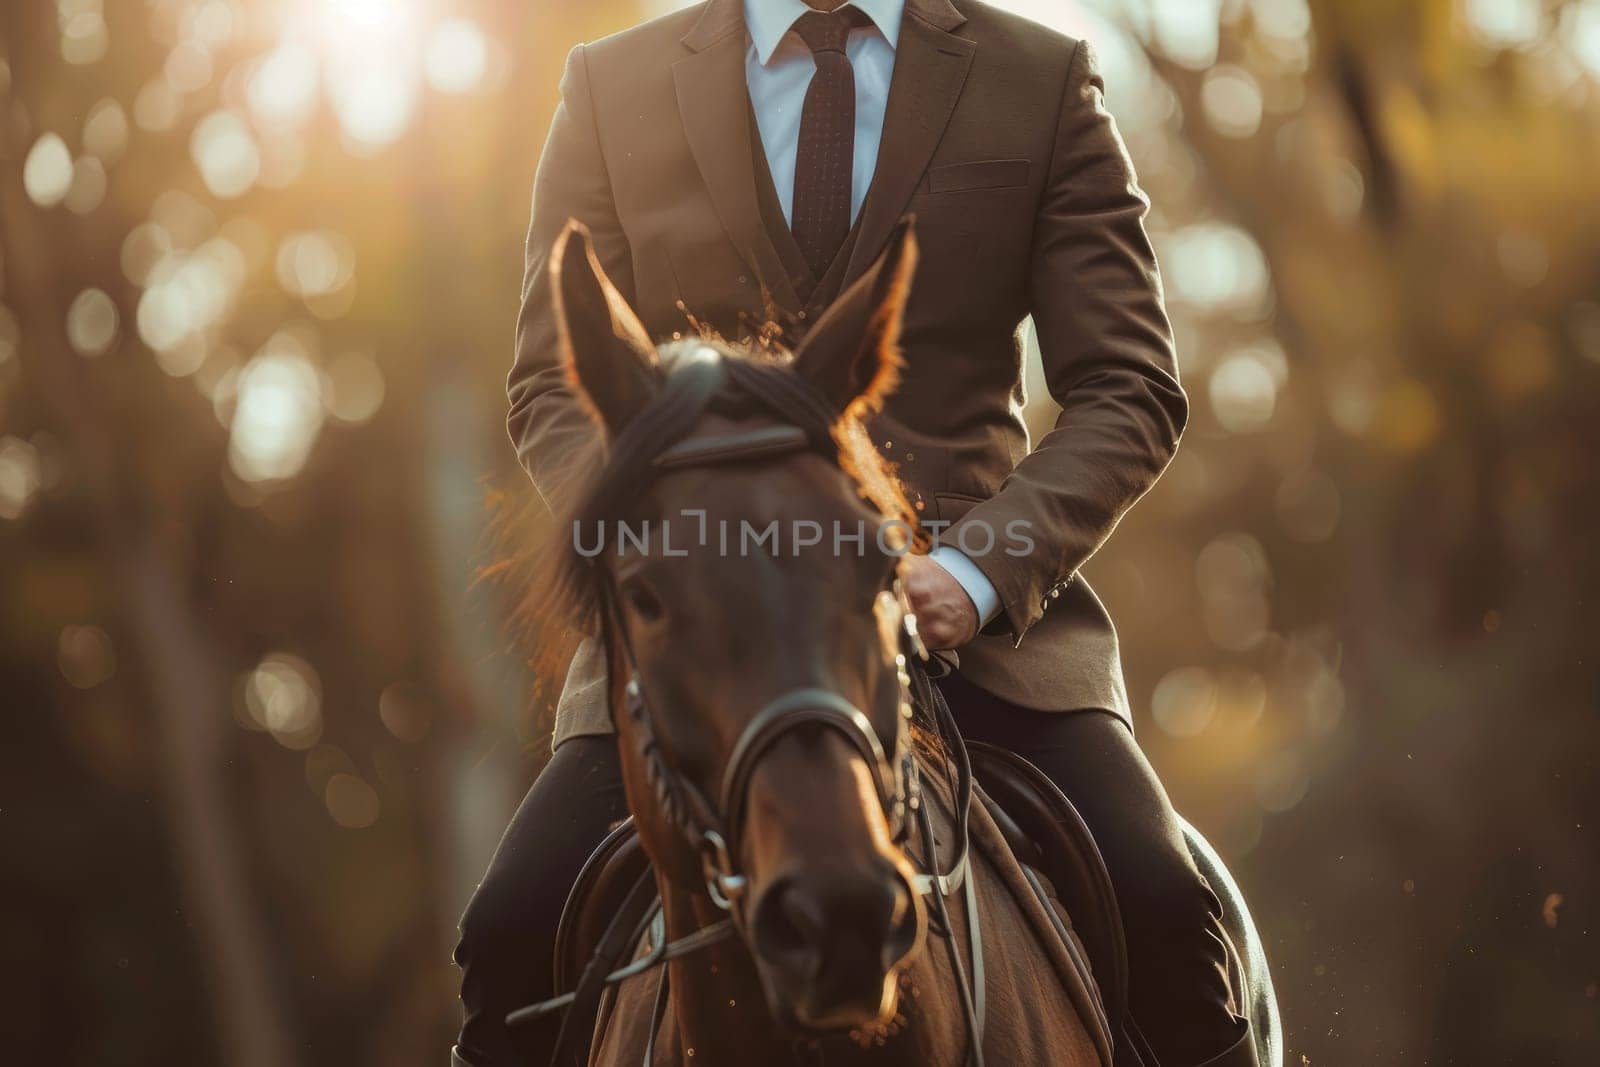 Businessman in suit on horseback, Well dressed man on horseback.